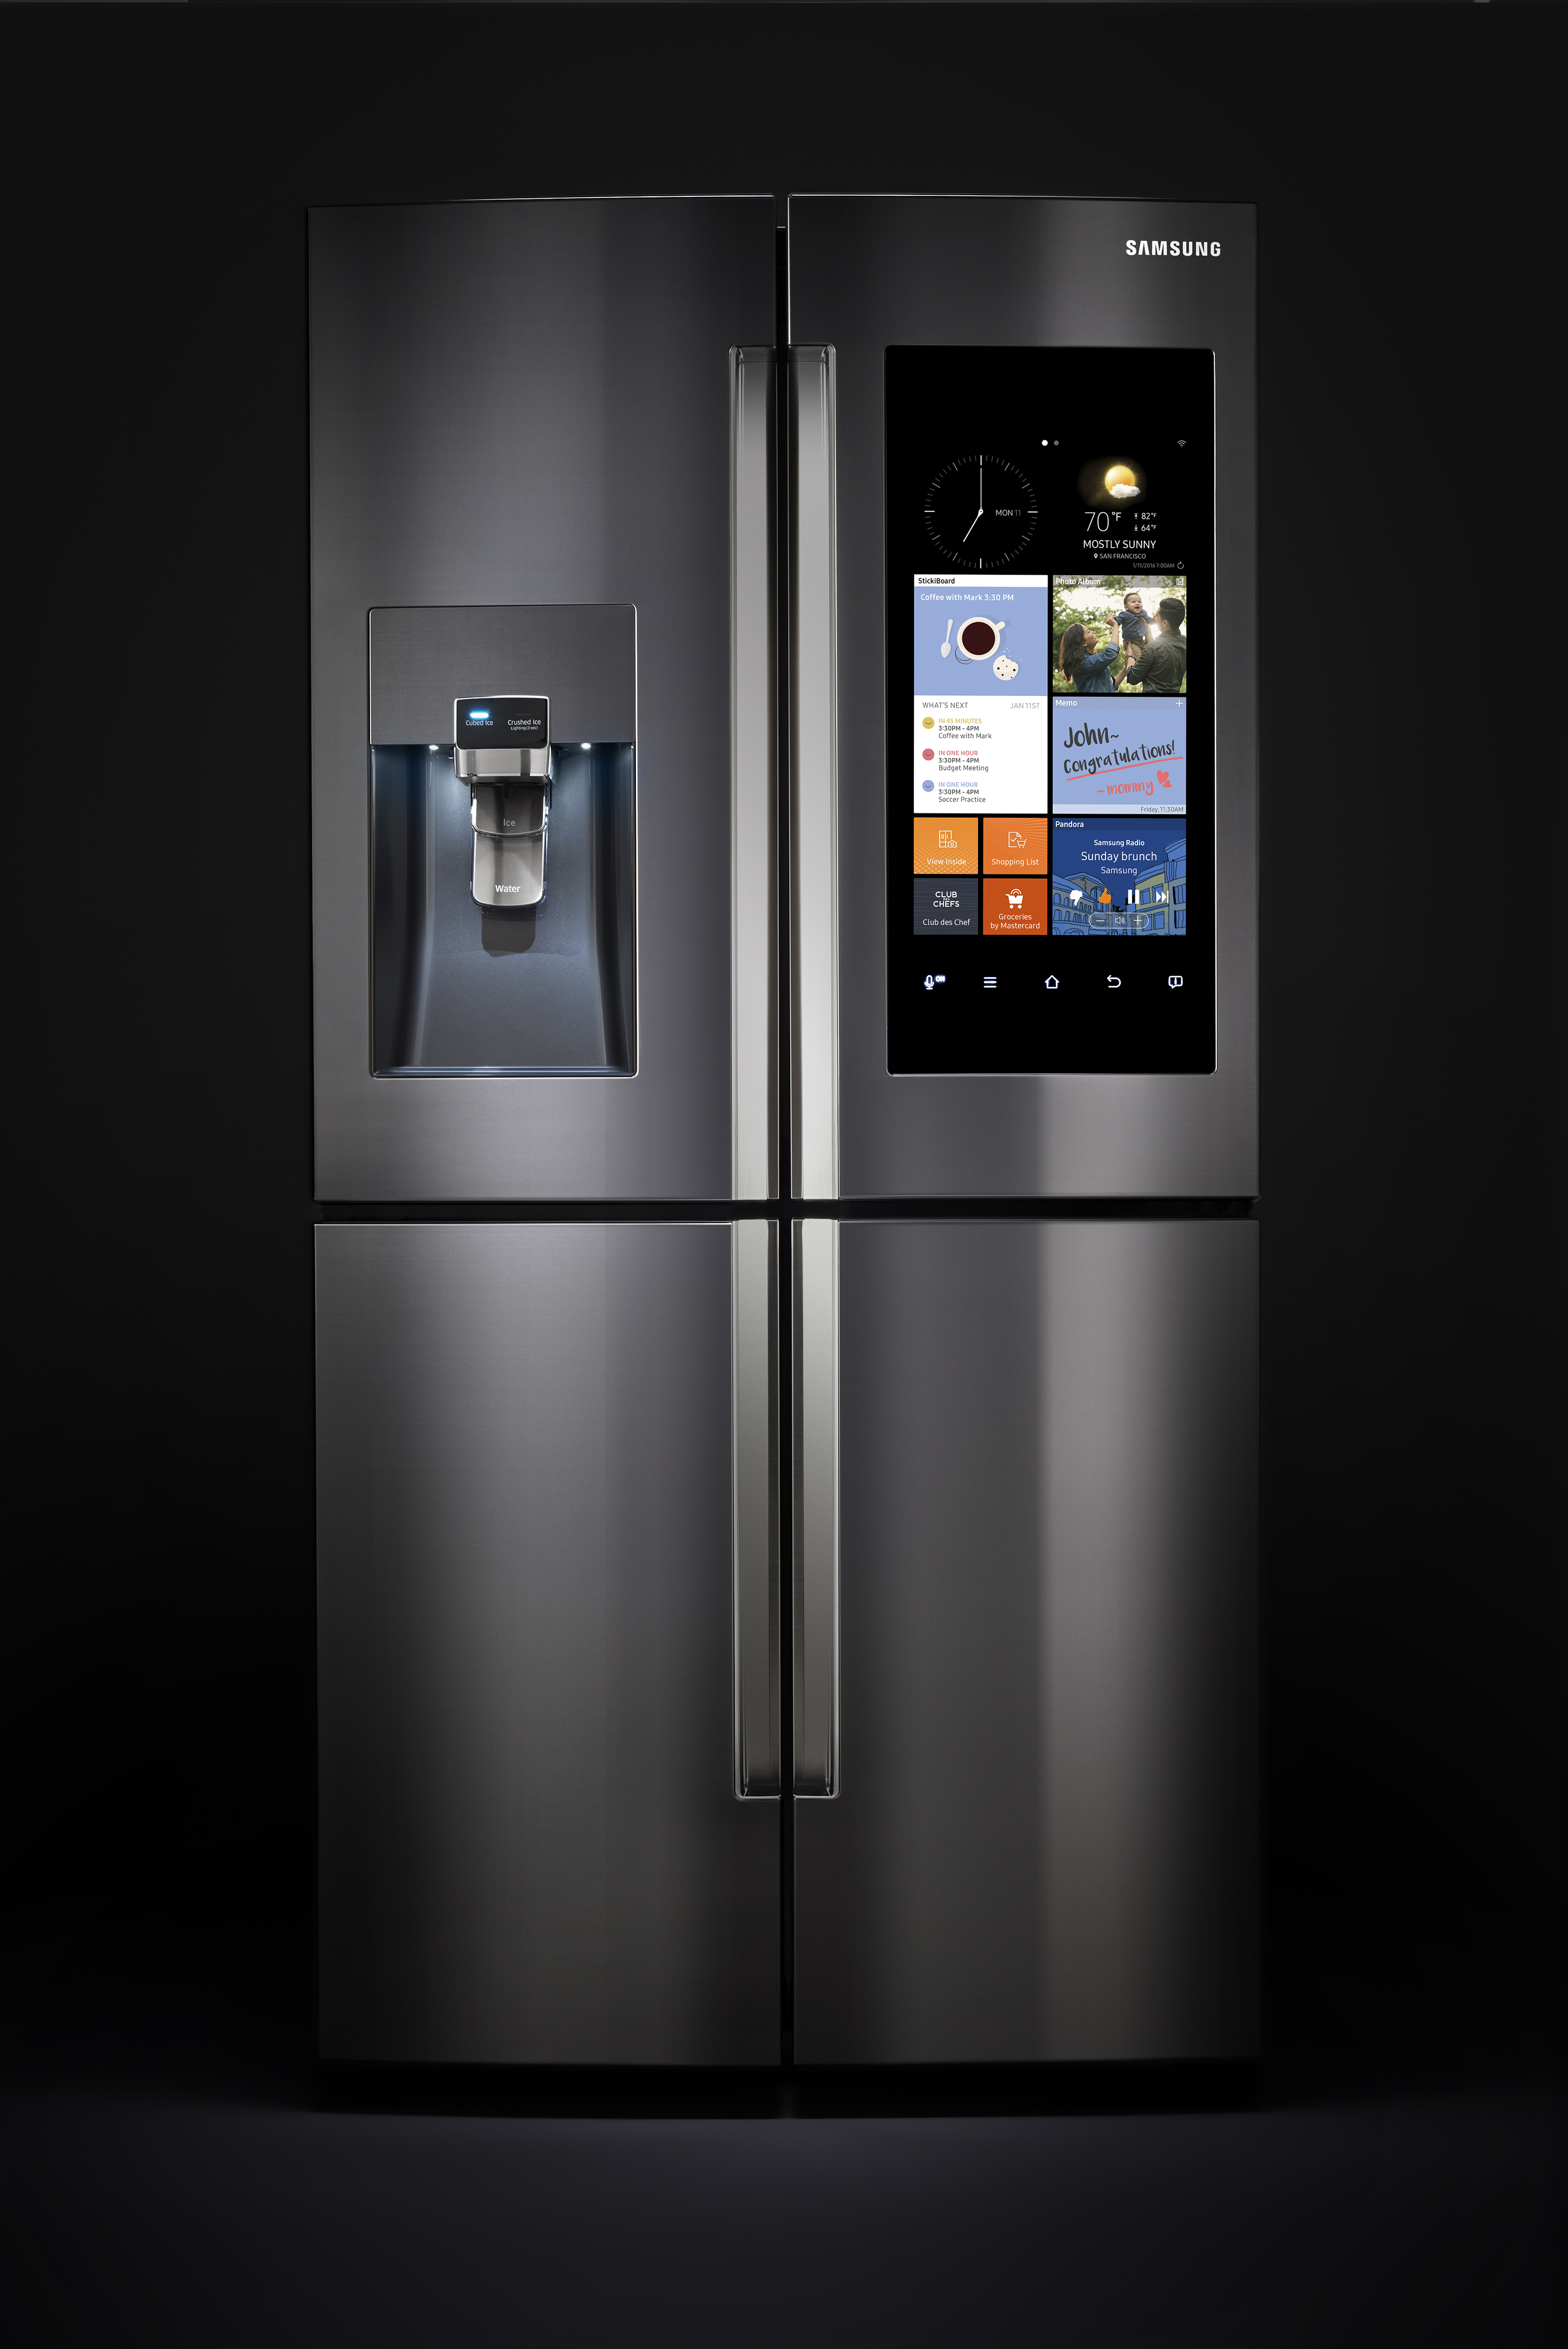 Cheap >samsung touch screen fridge big sale - OFF 64%